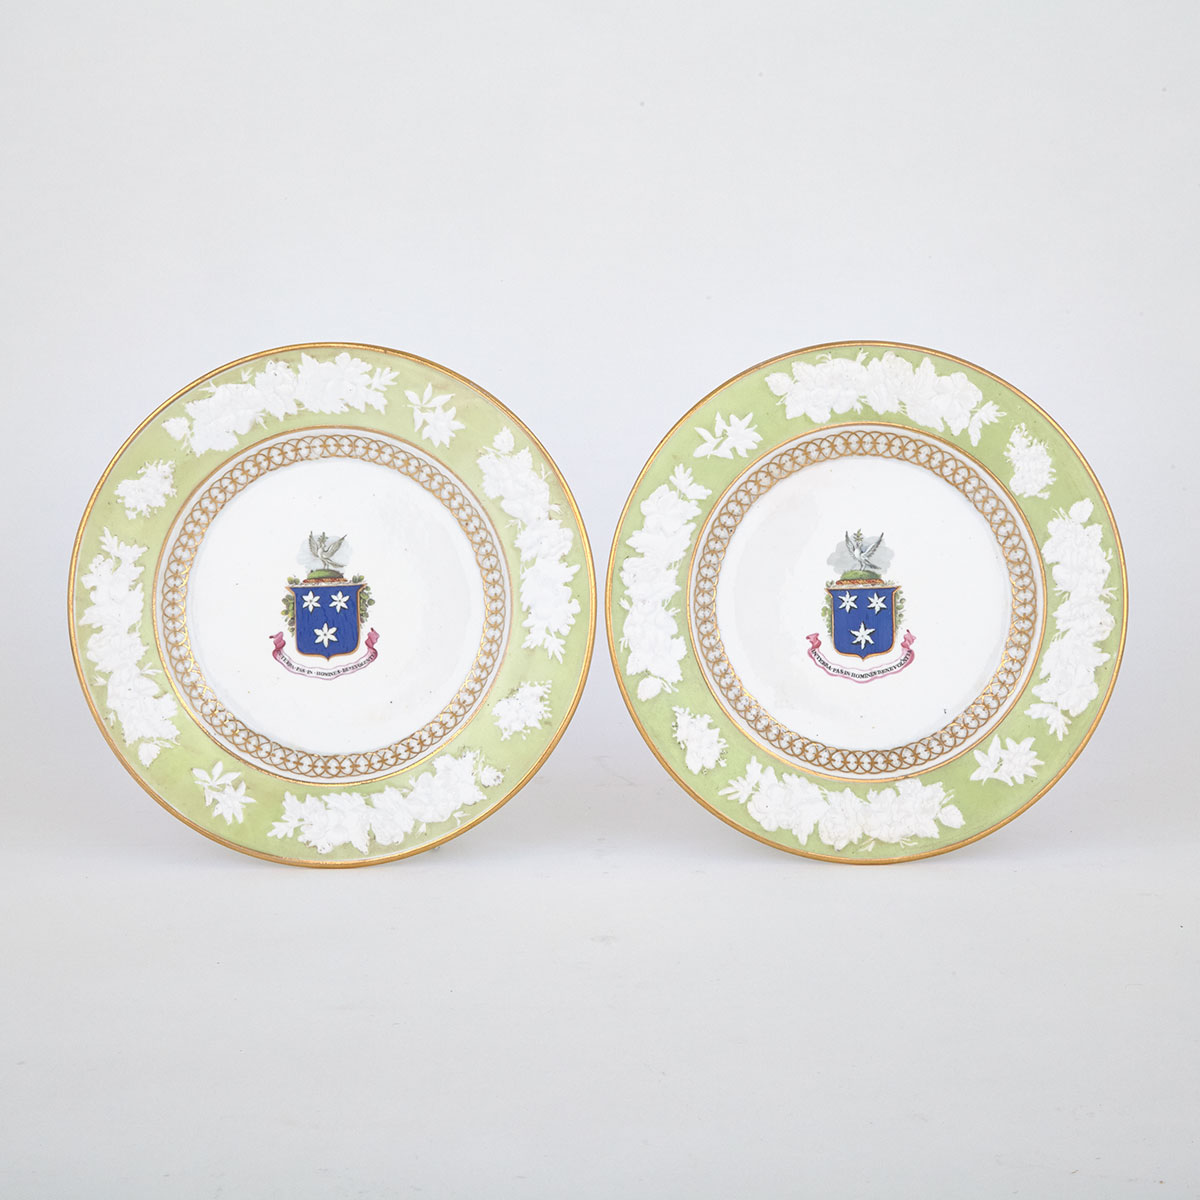 Pair of English Porcelain Armorial Plates, c.1825